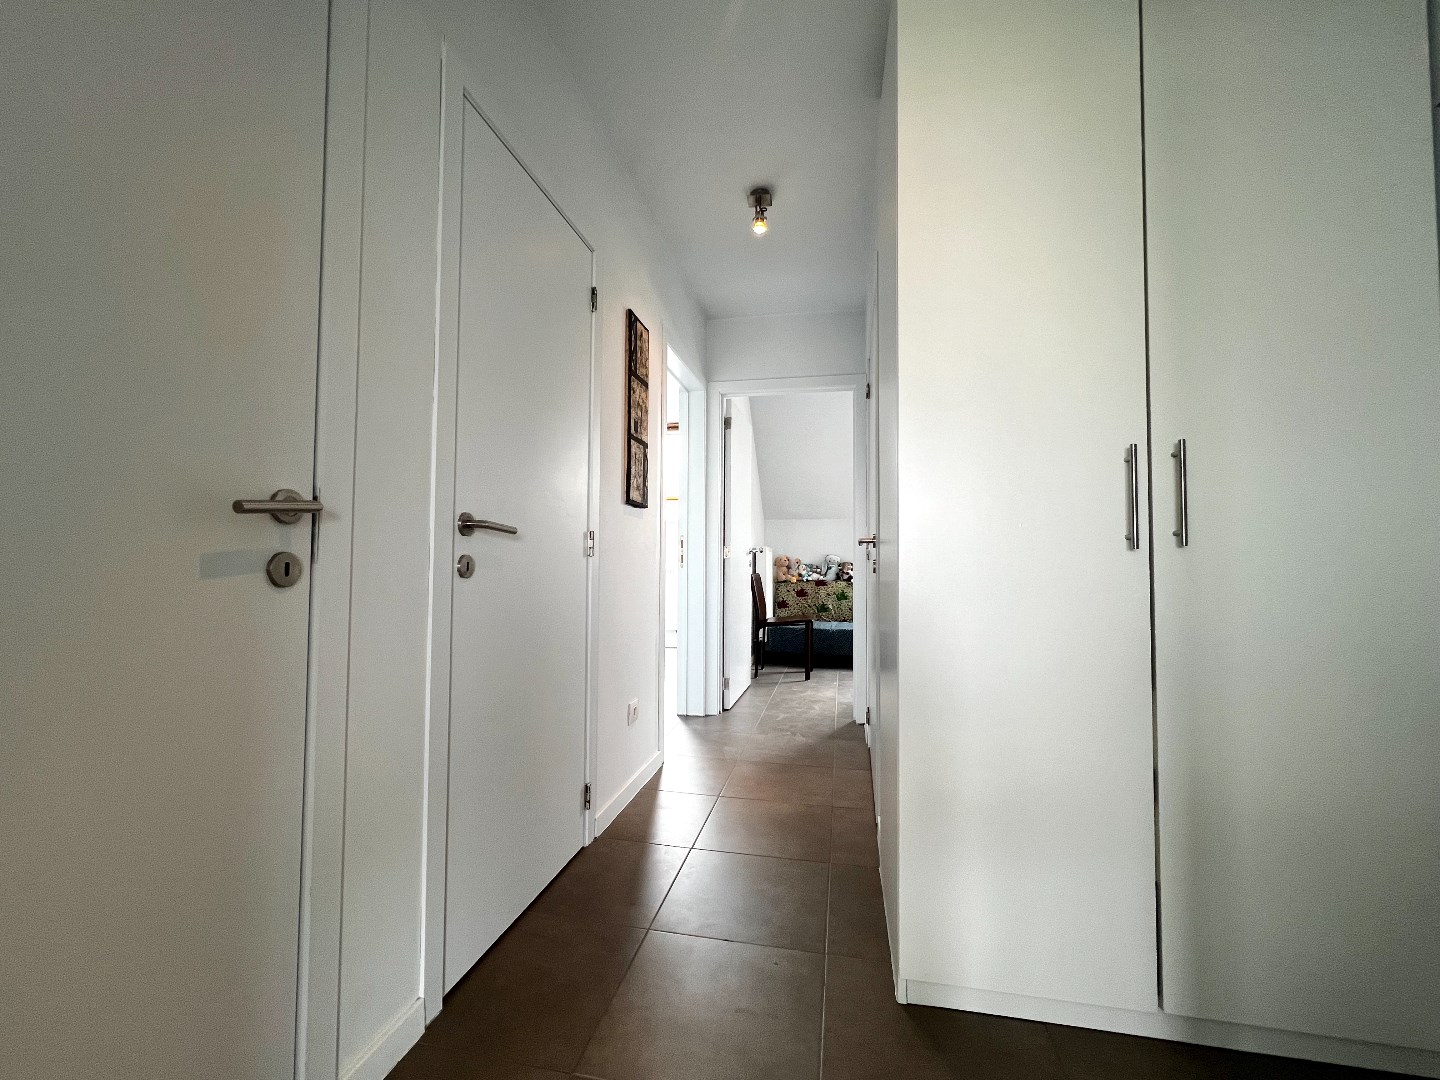 Instapklaar appartement met 2 slaapkamers, autostandplaats en kelderberging te koop te Harelbeke! foto 3